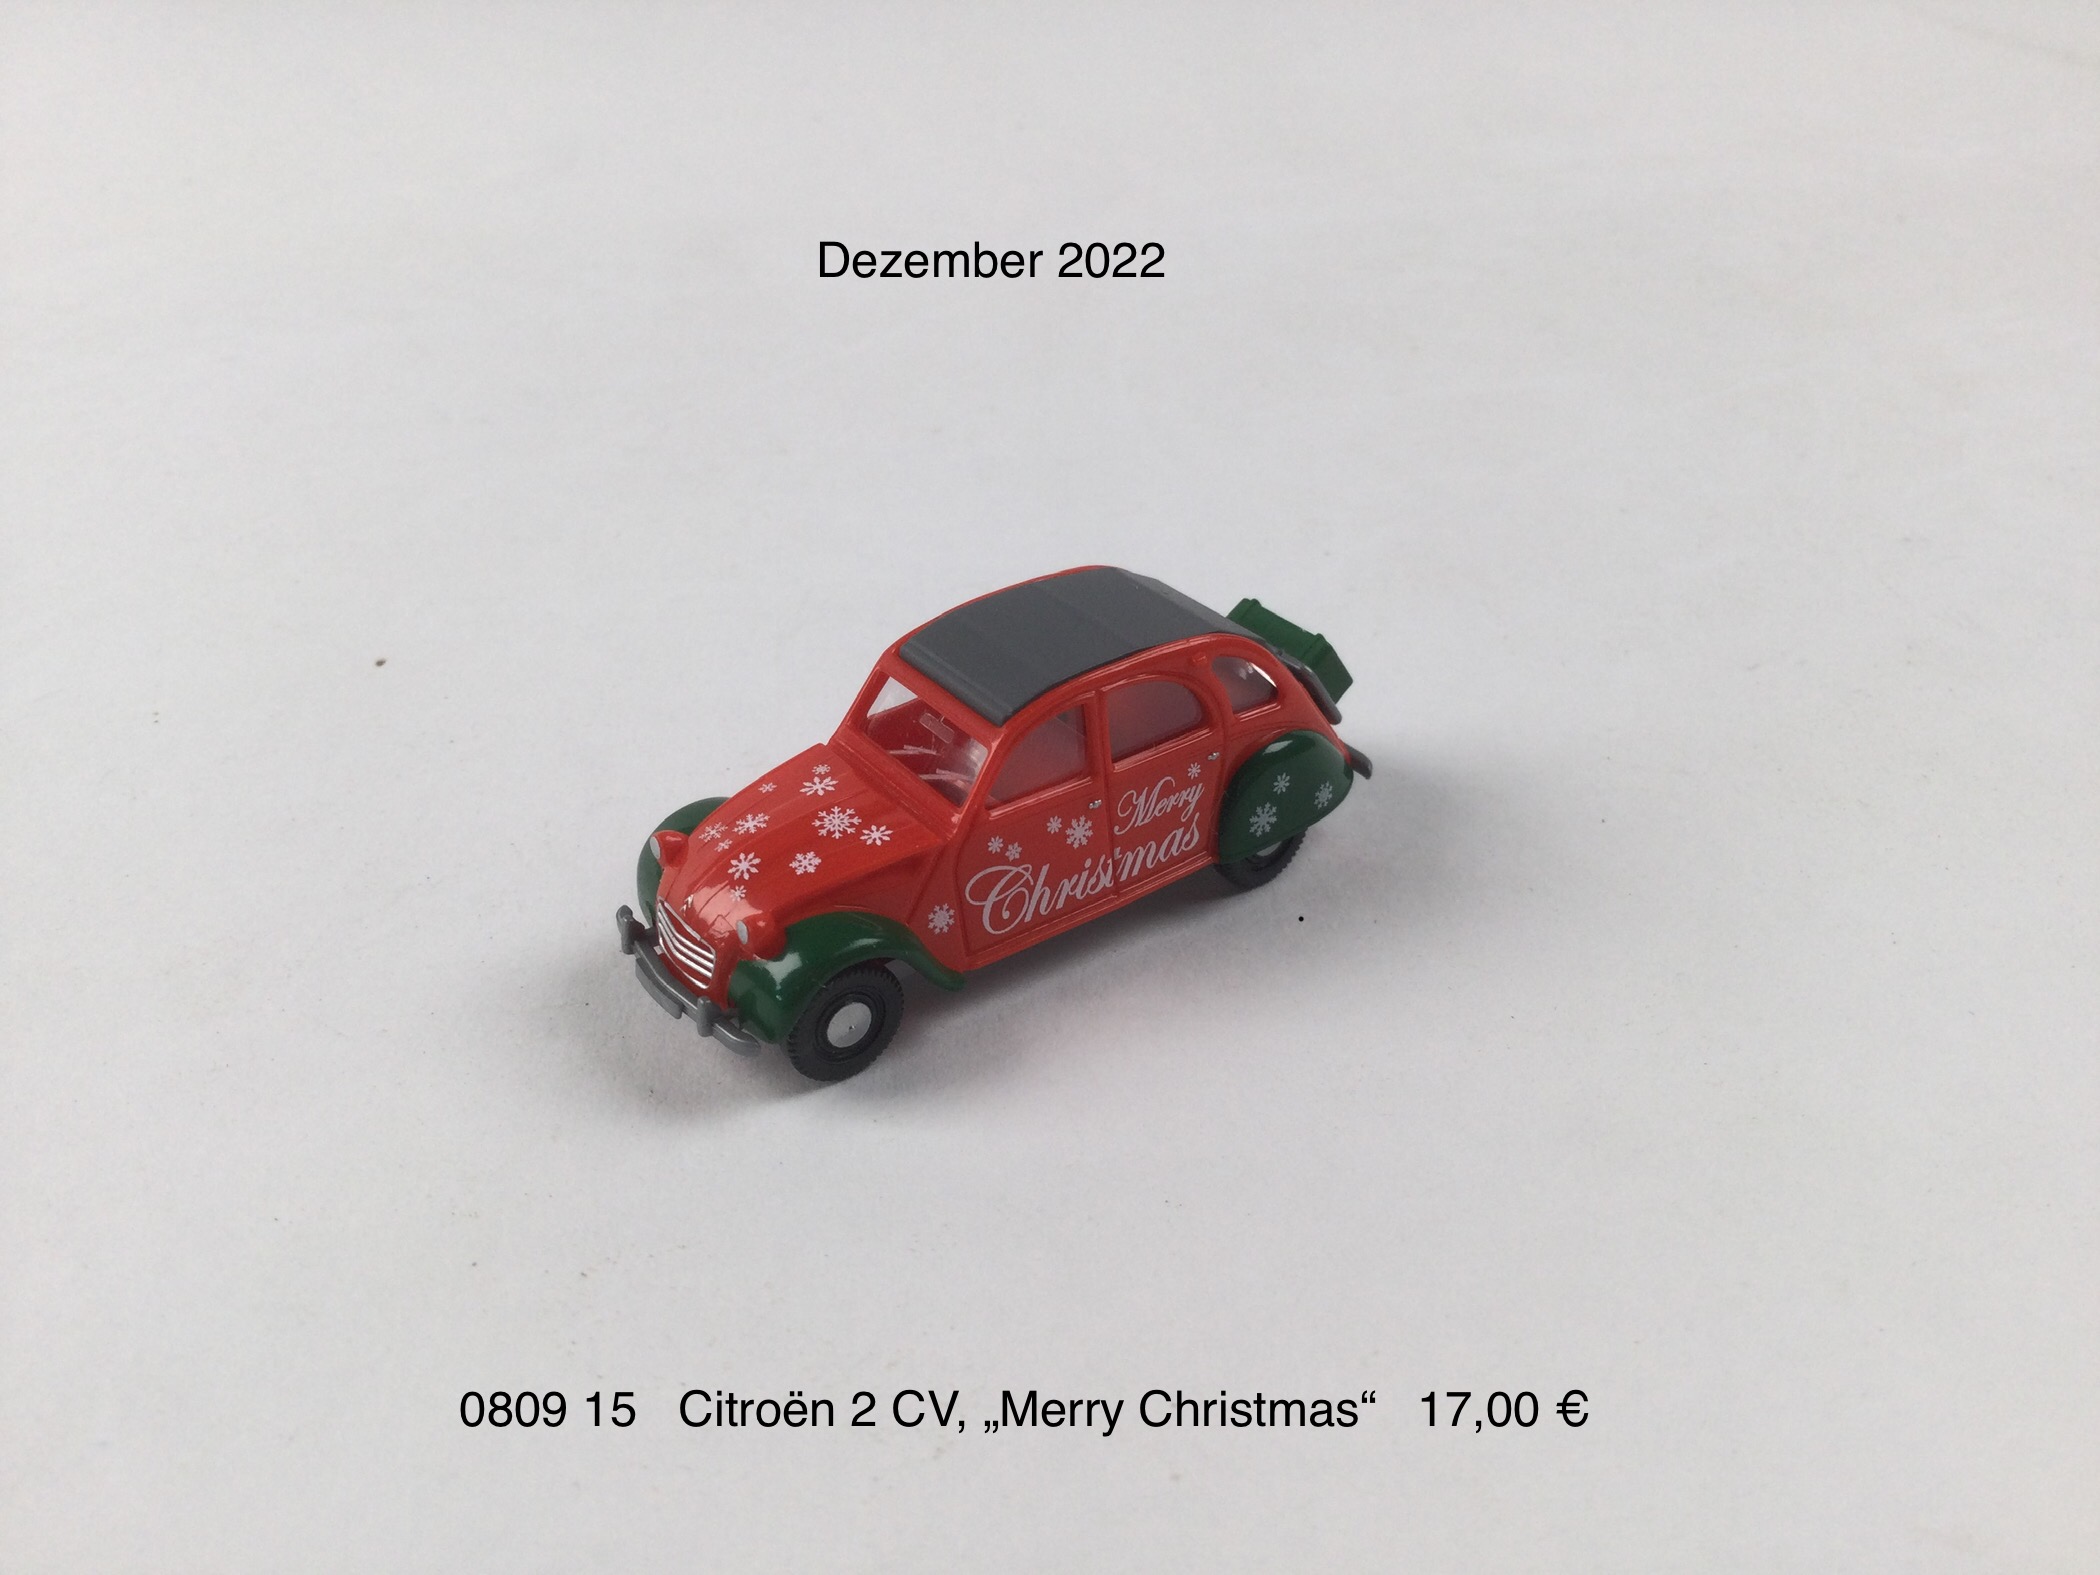 Citroen 2 CV "Merry Christmas"